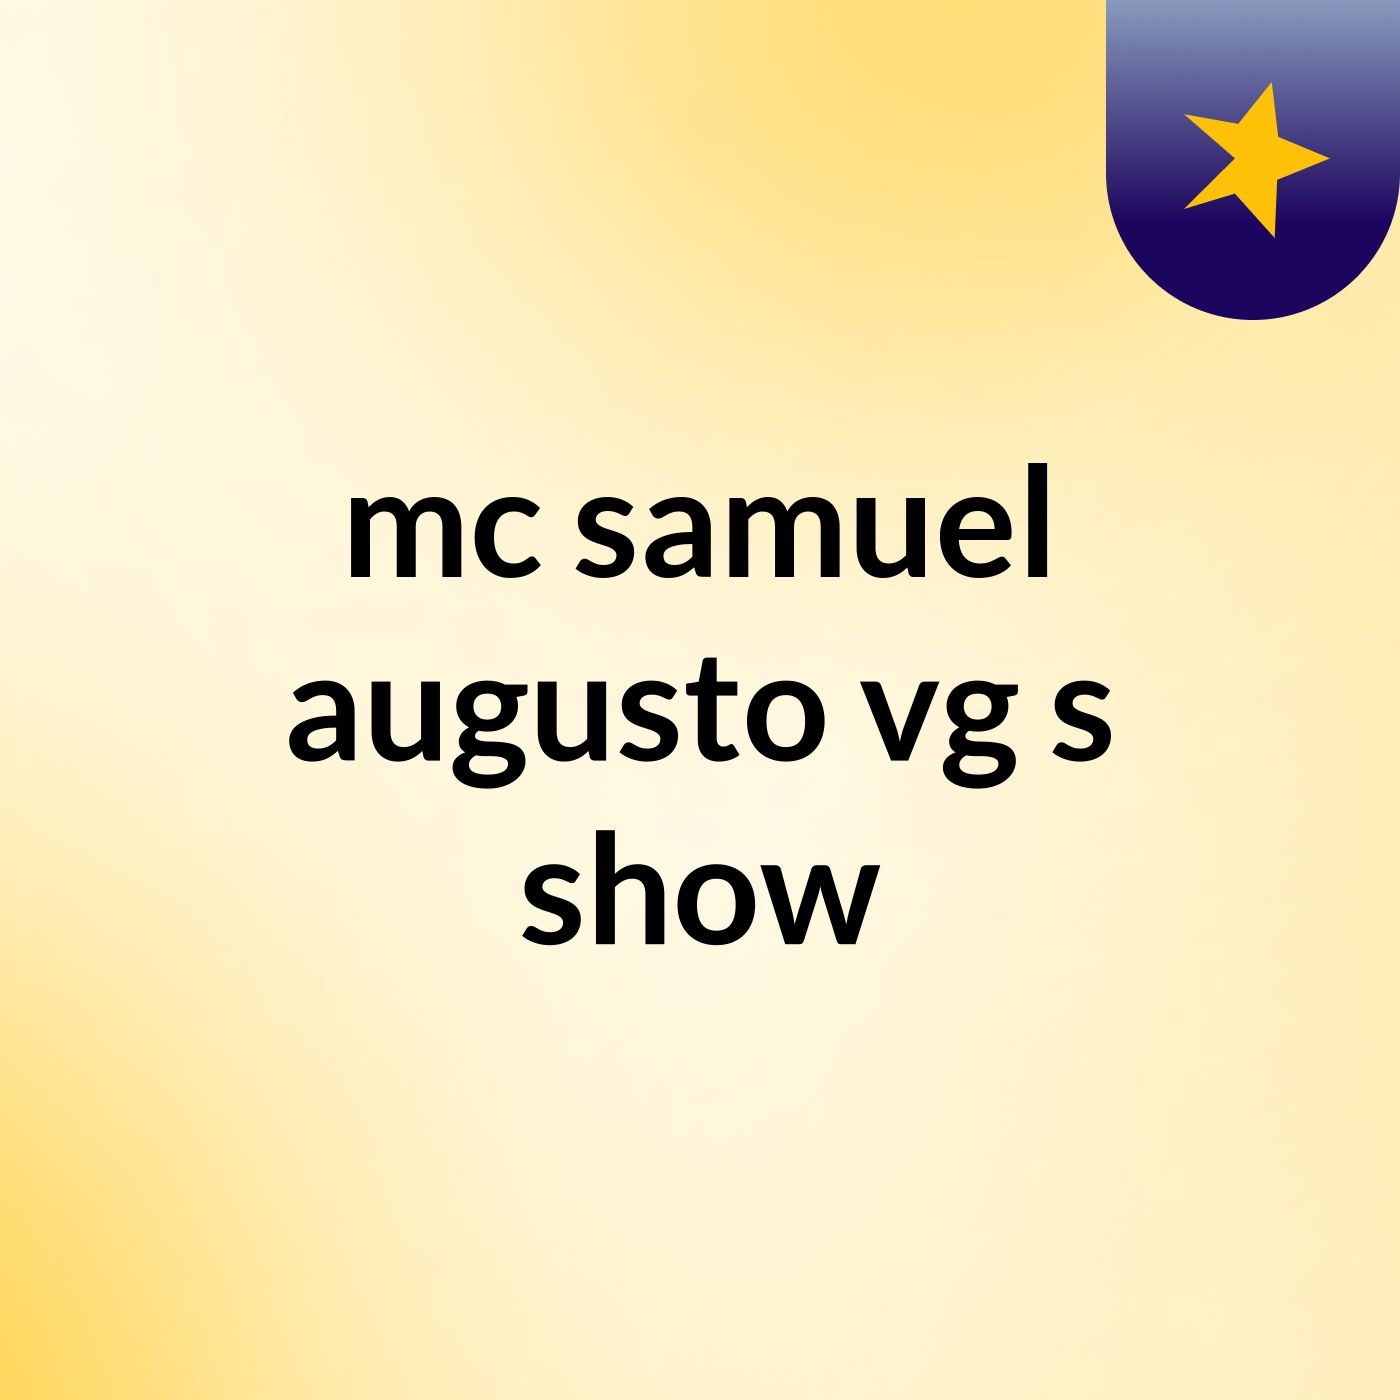 mc samuel augusto vg's show